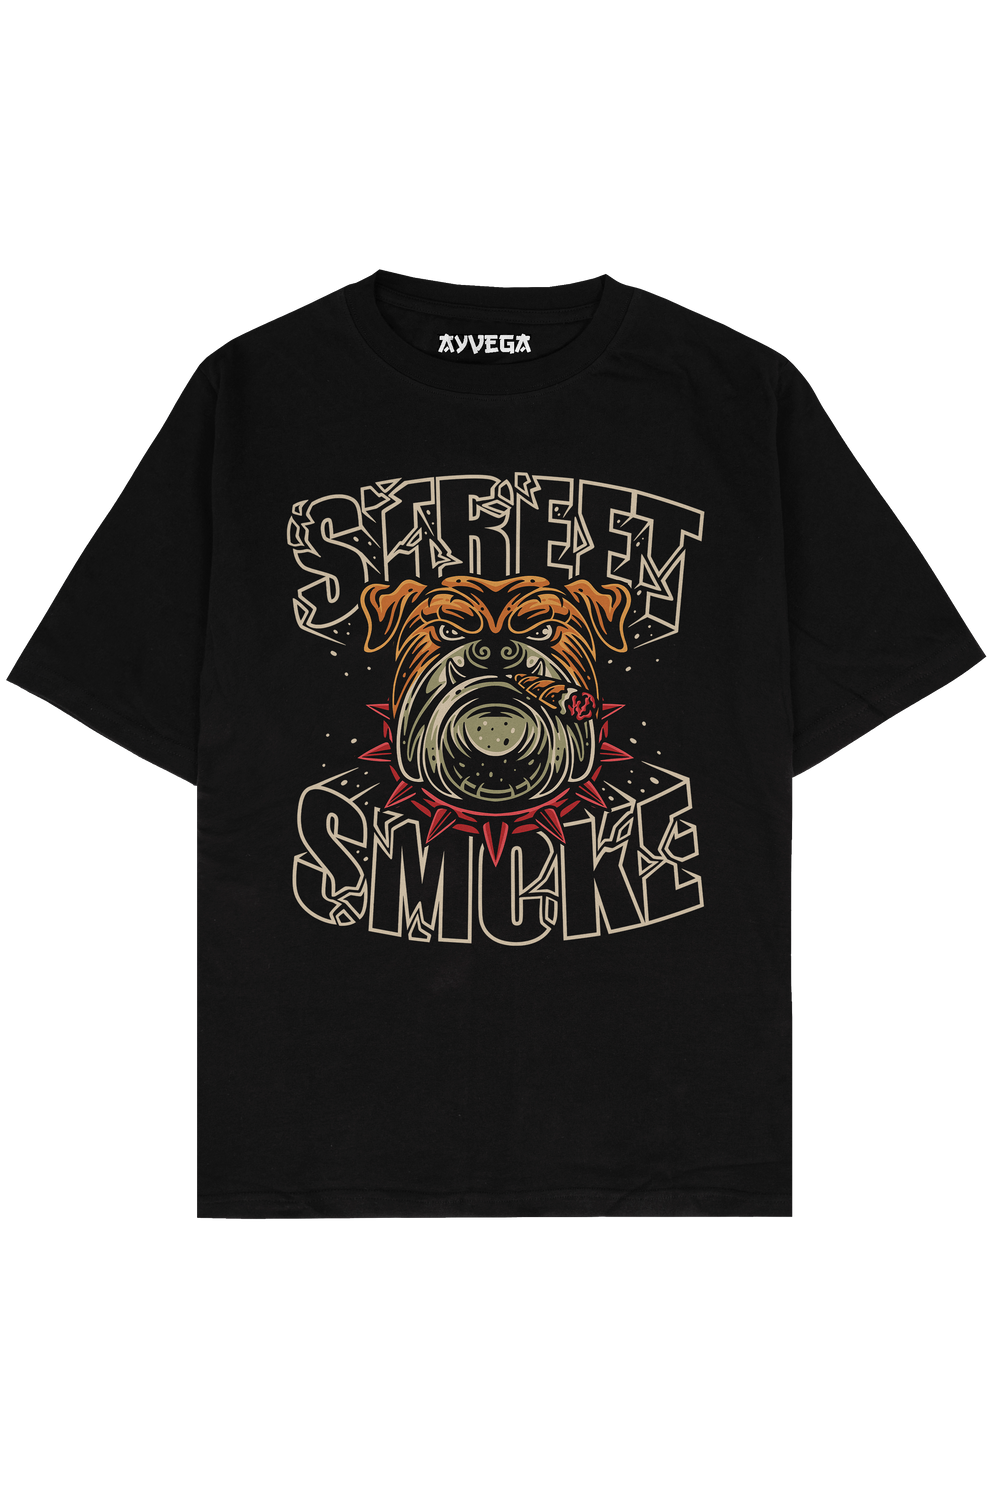 Street Smoke